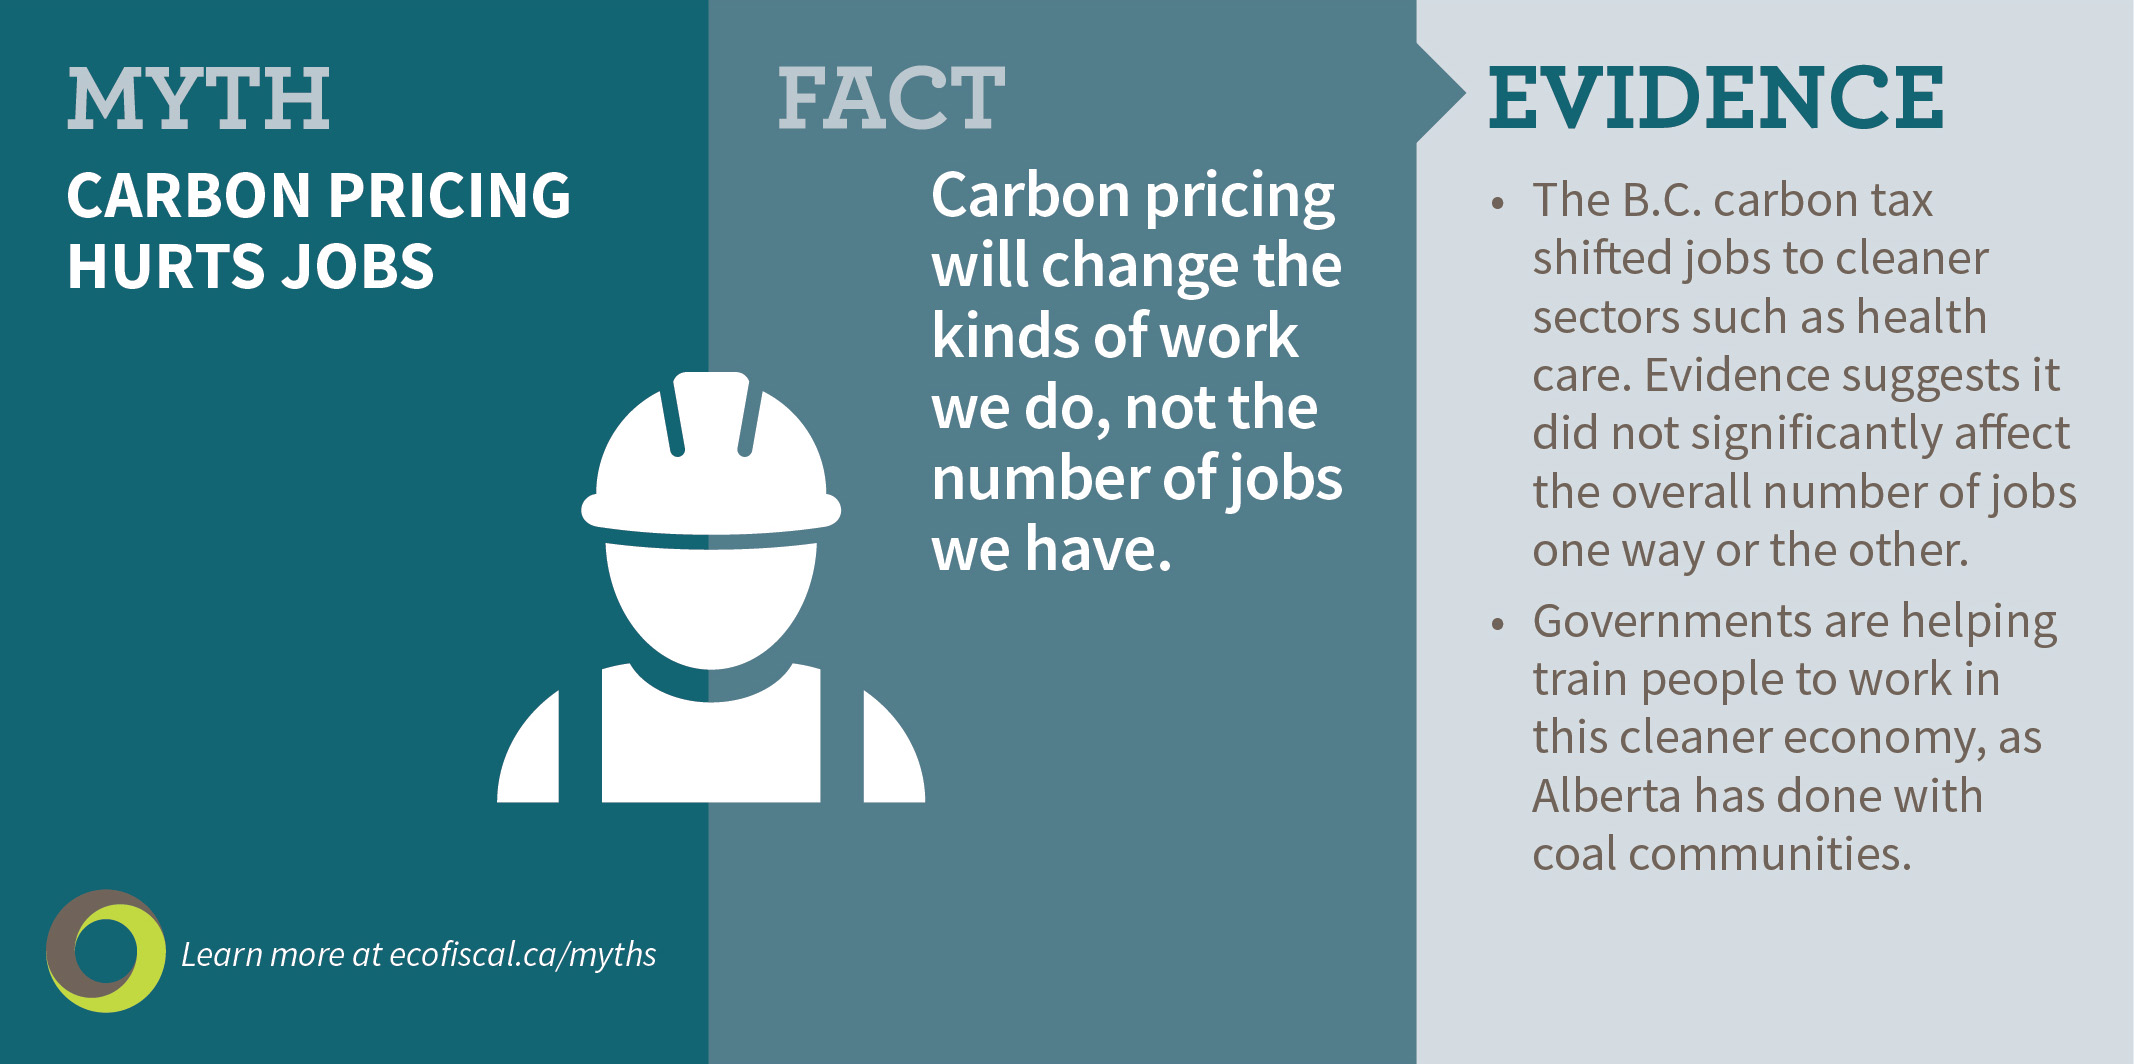 Myth #4: Carbon pricing hurts jobs